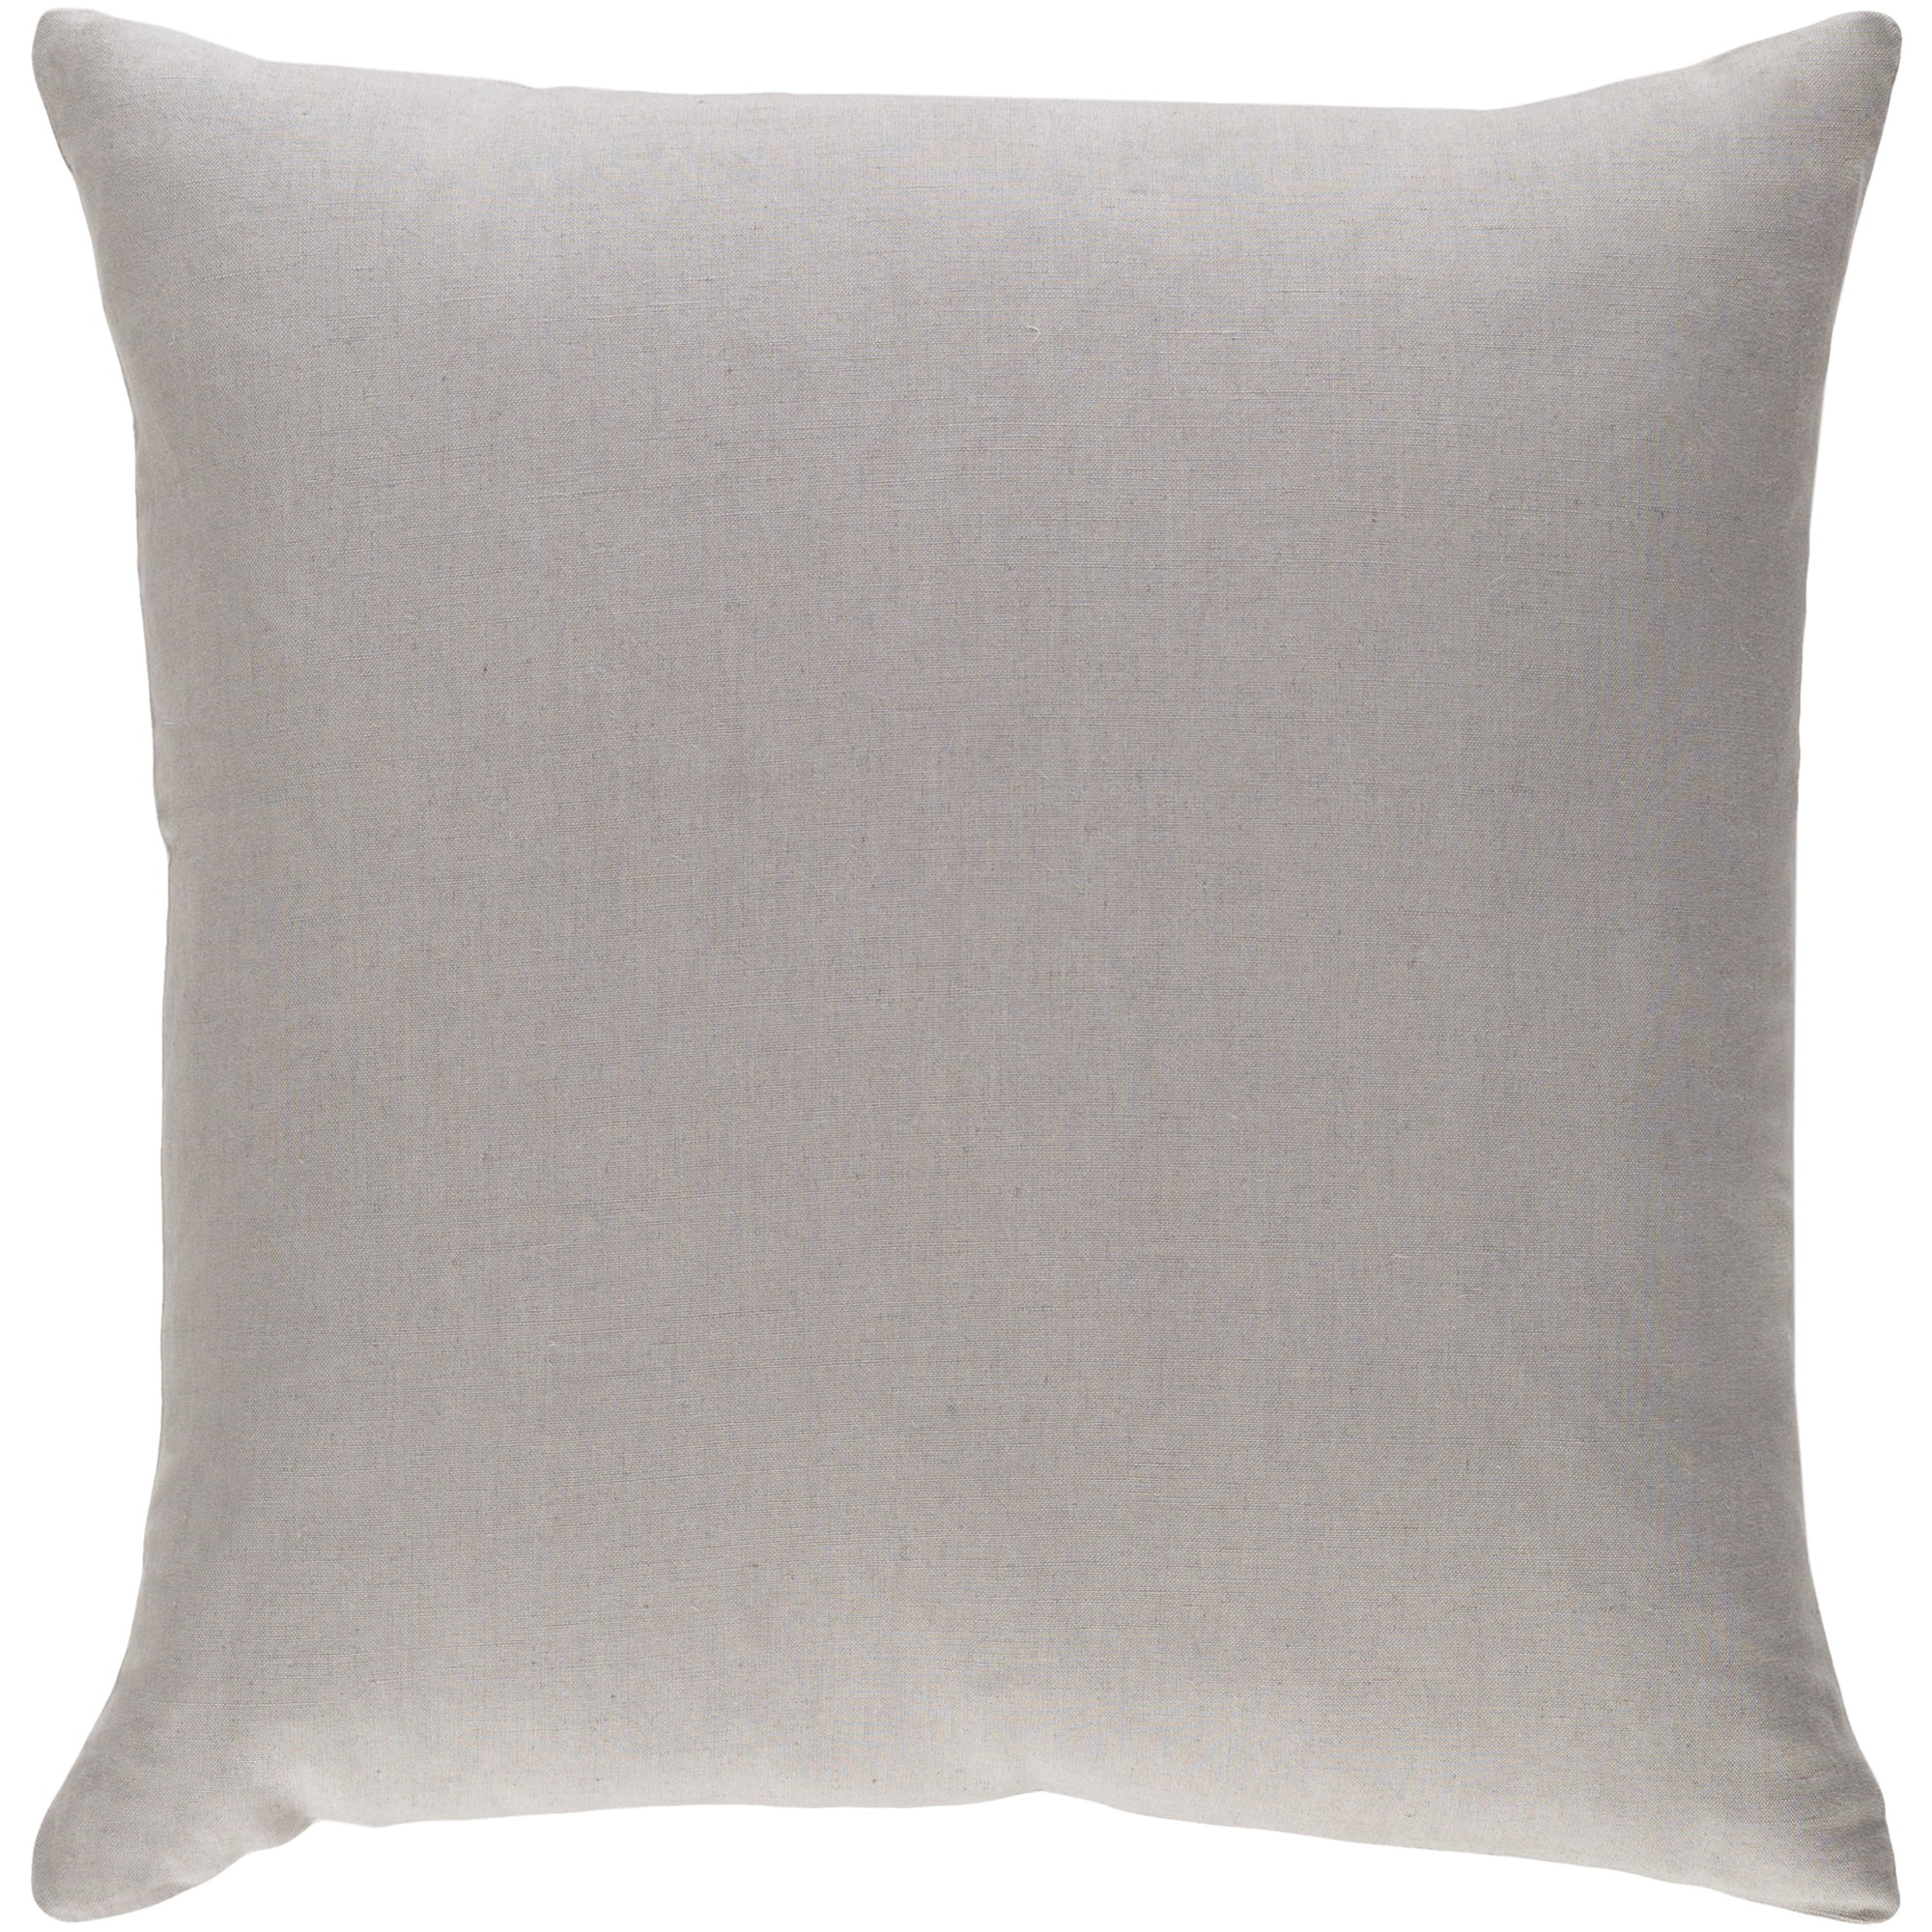 Artistic Weavers HOLI-7251 Holiday Winter Pillow Cover 18' X 18' Metallic Square,Metallic